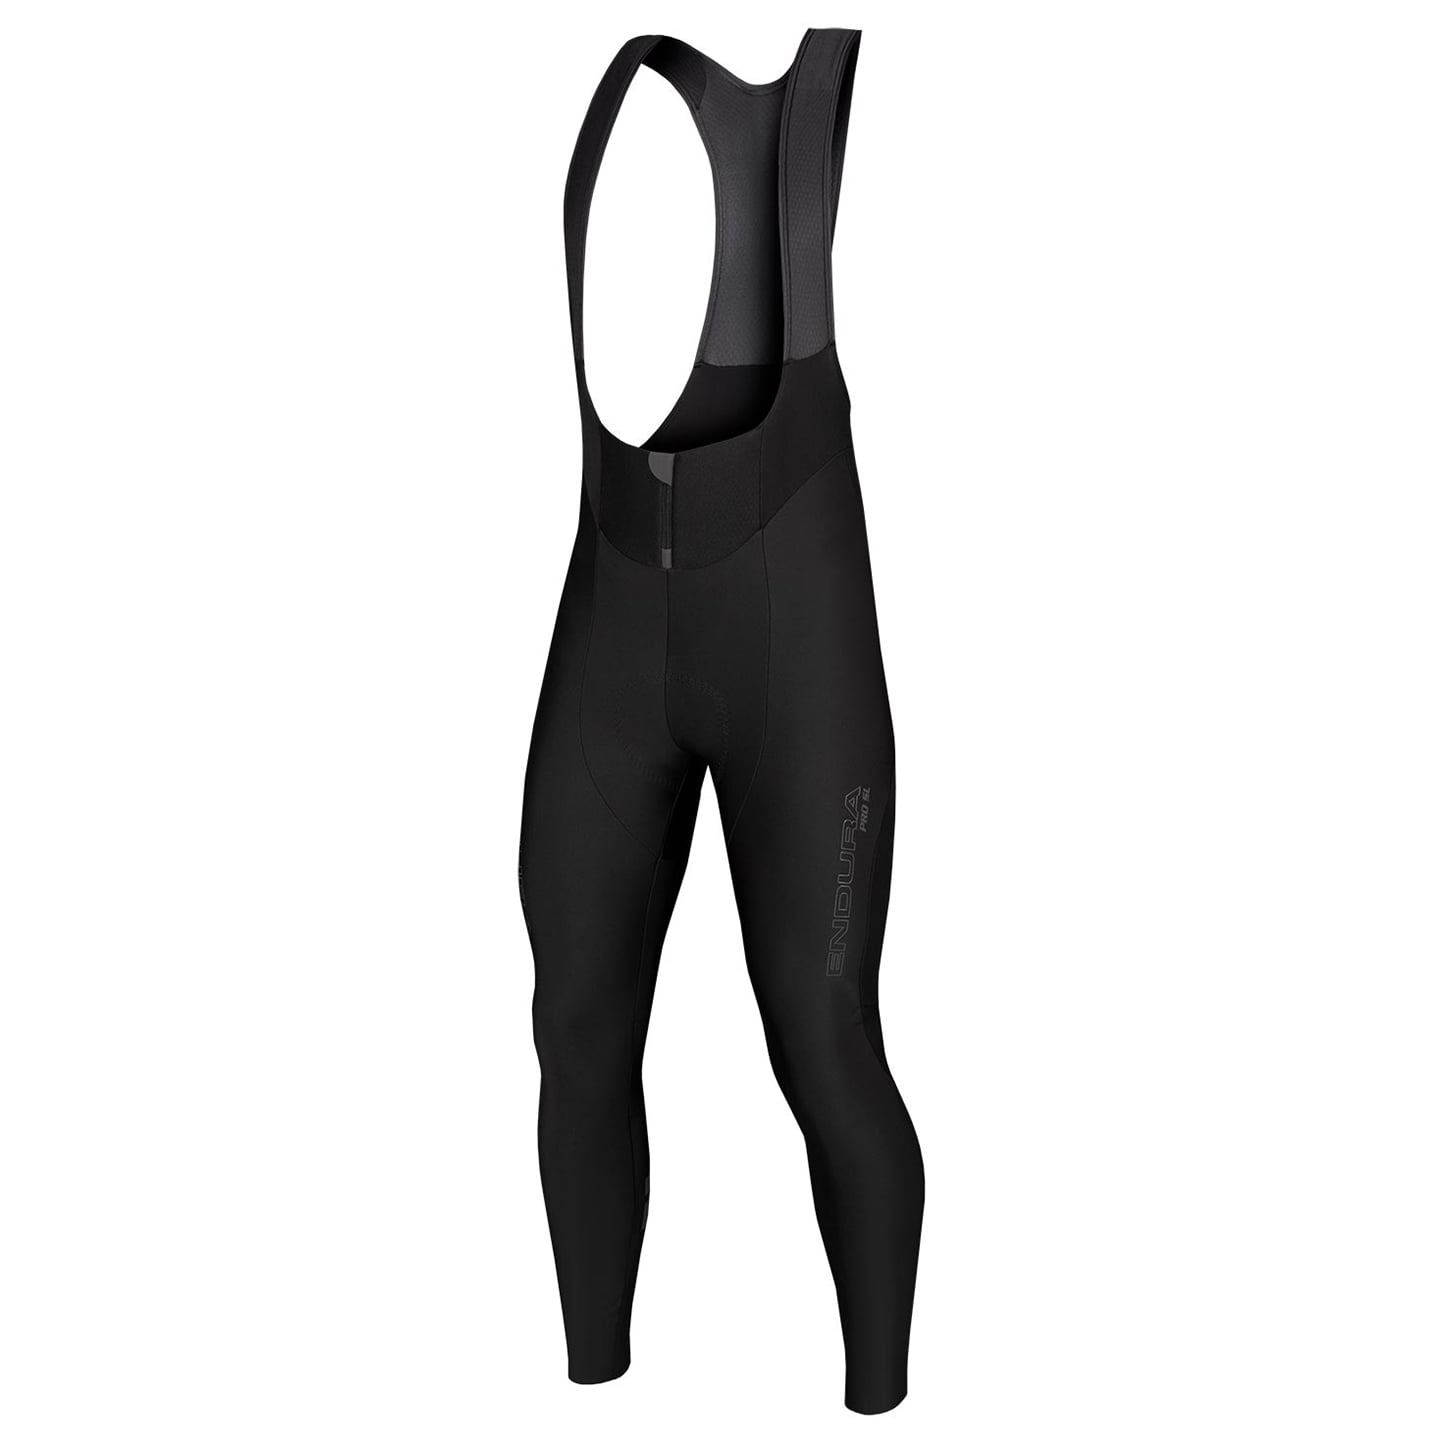 ENDURA Pro SL II Bib Tights, for men, size M, Cycle tights, Cycling clothing